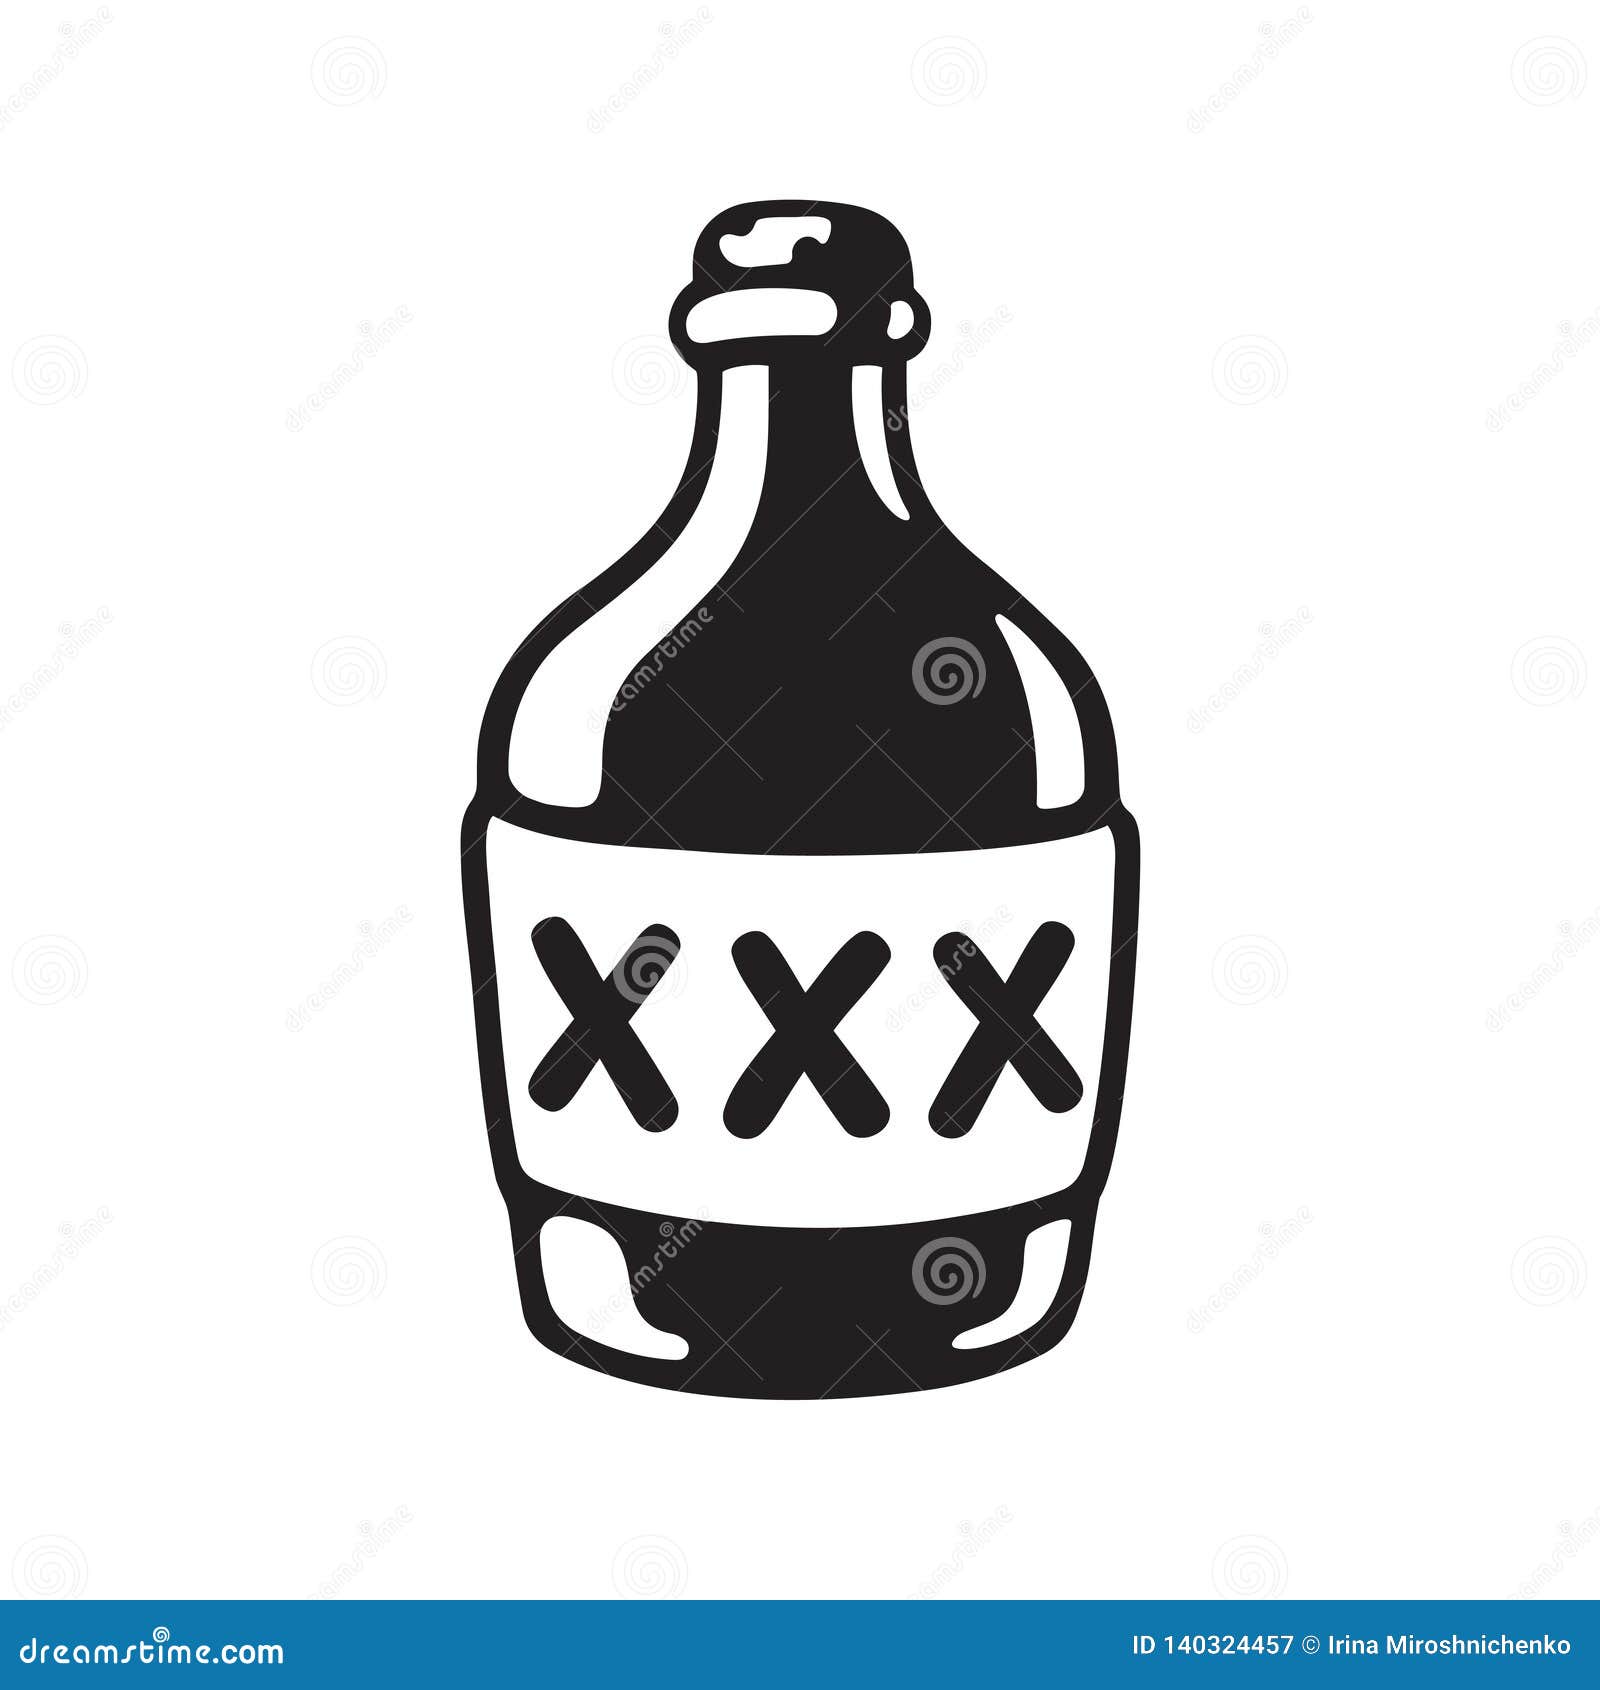 xxx alcohol bottle